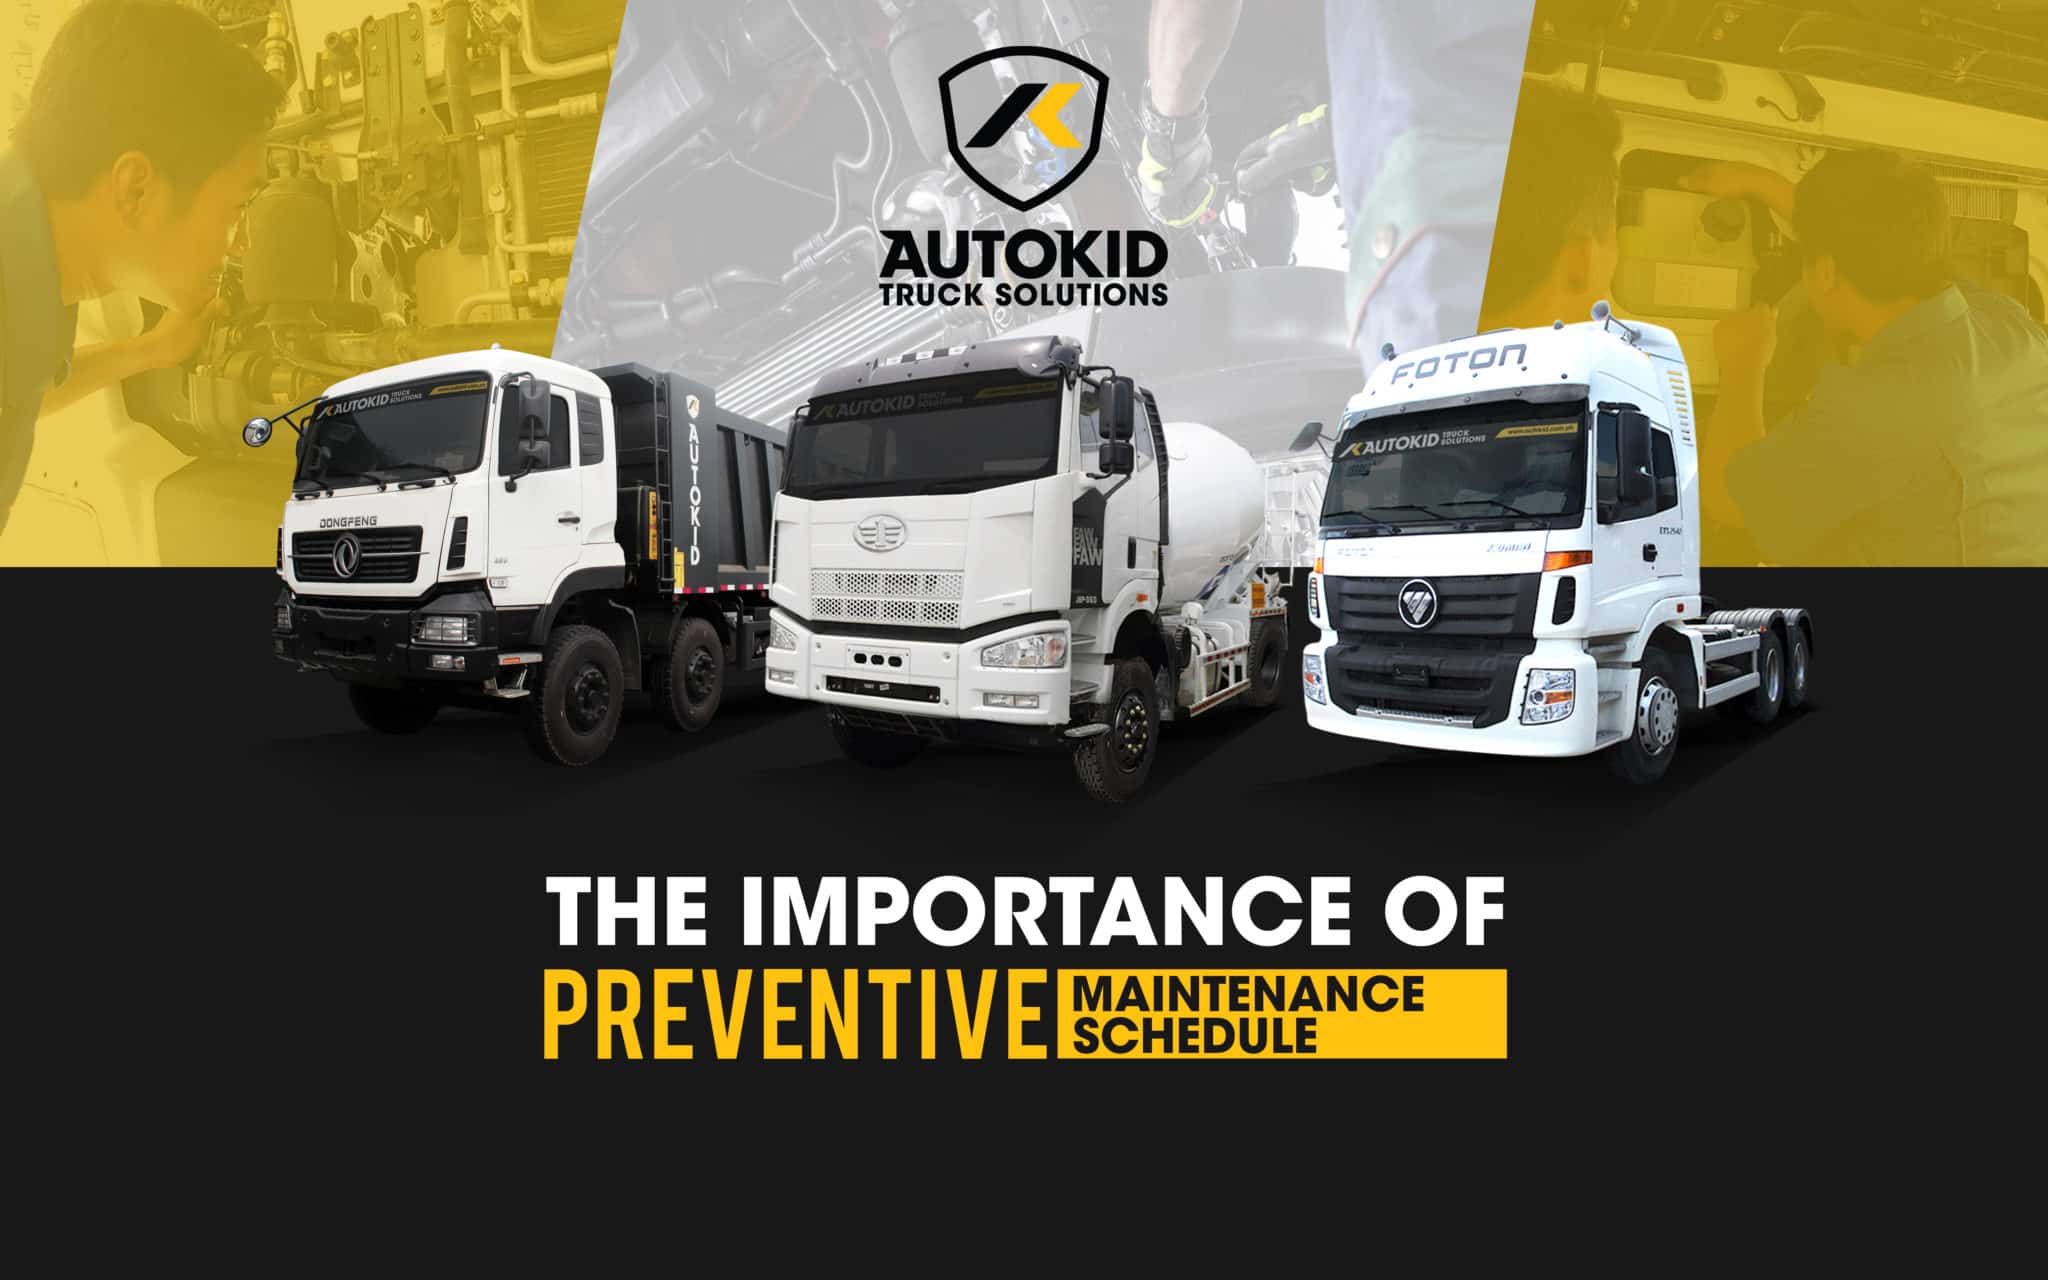 Preventive Maintenance Schedule: Why follow it closely? - Autokid